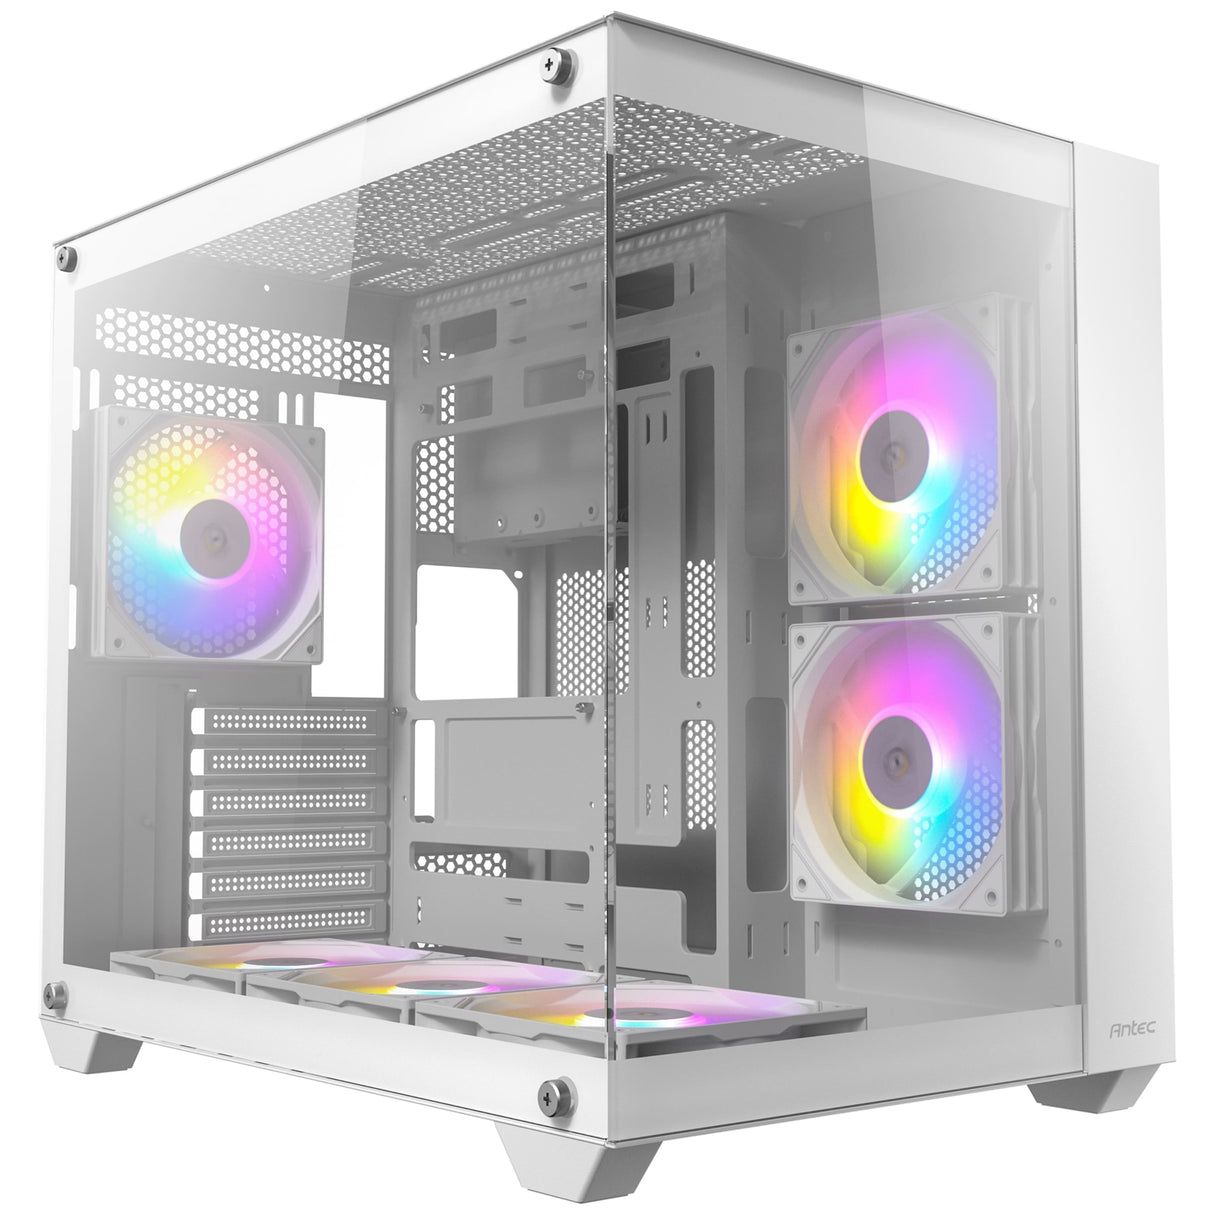 ANTEC CX800 Mid Tower Gaming Case, White, 270 Full-view tempered glass, 6x 120mm RGB fans, 1x USB 2.0 / 1x USB 3.0, ATX, Micro ATX, ITX